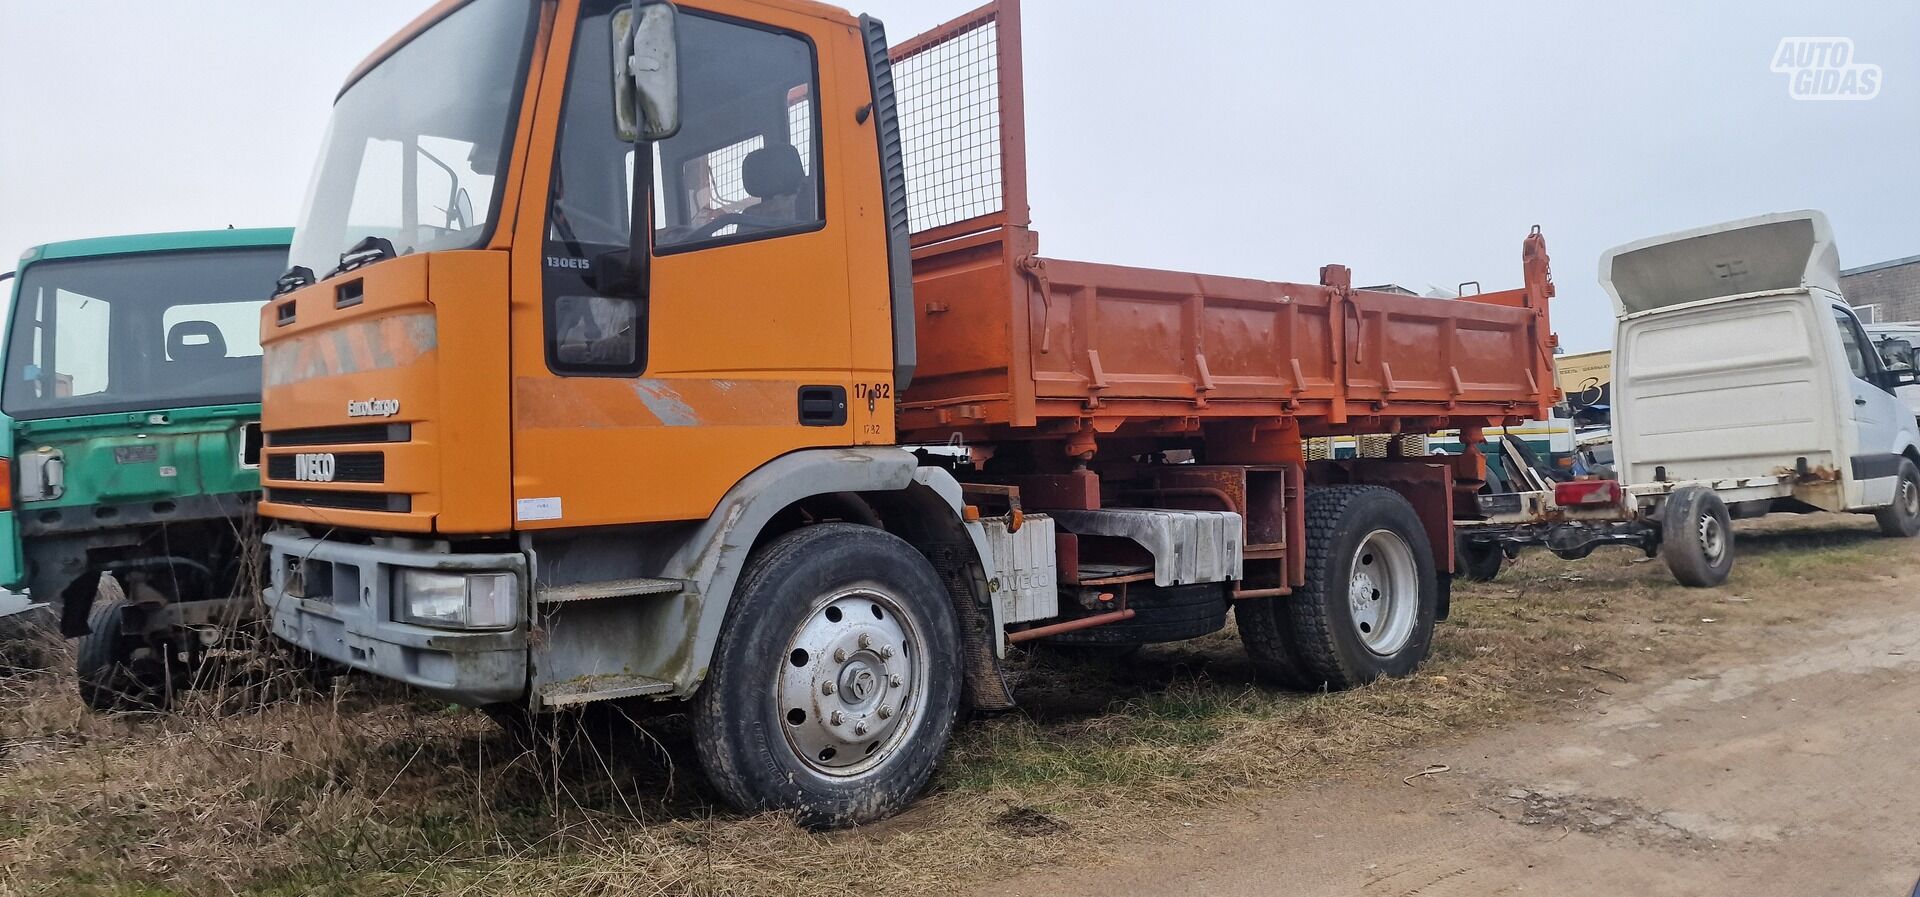 Iveco 13E 15 2000 y Dump truck